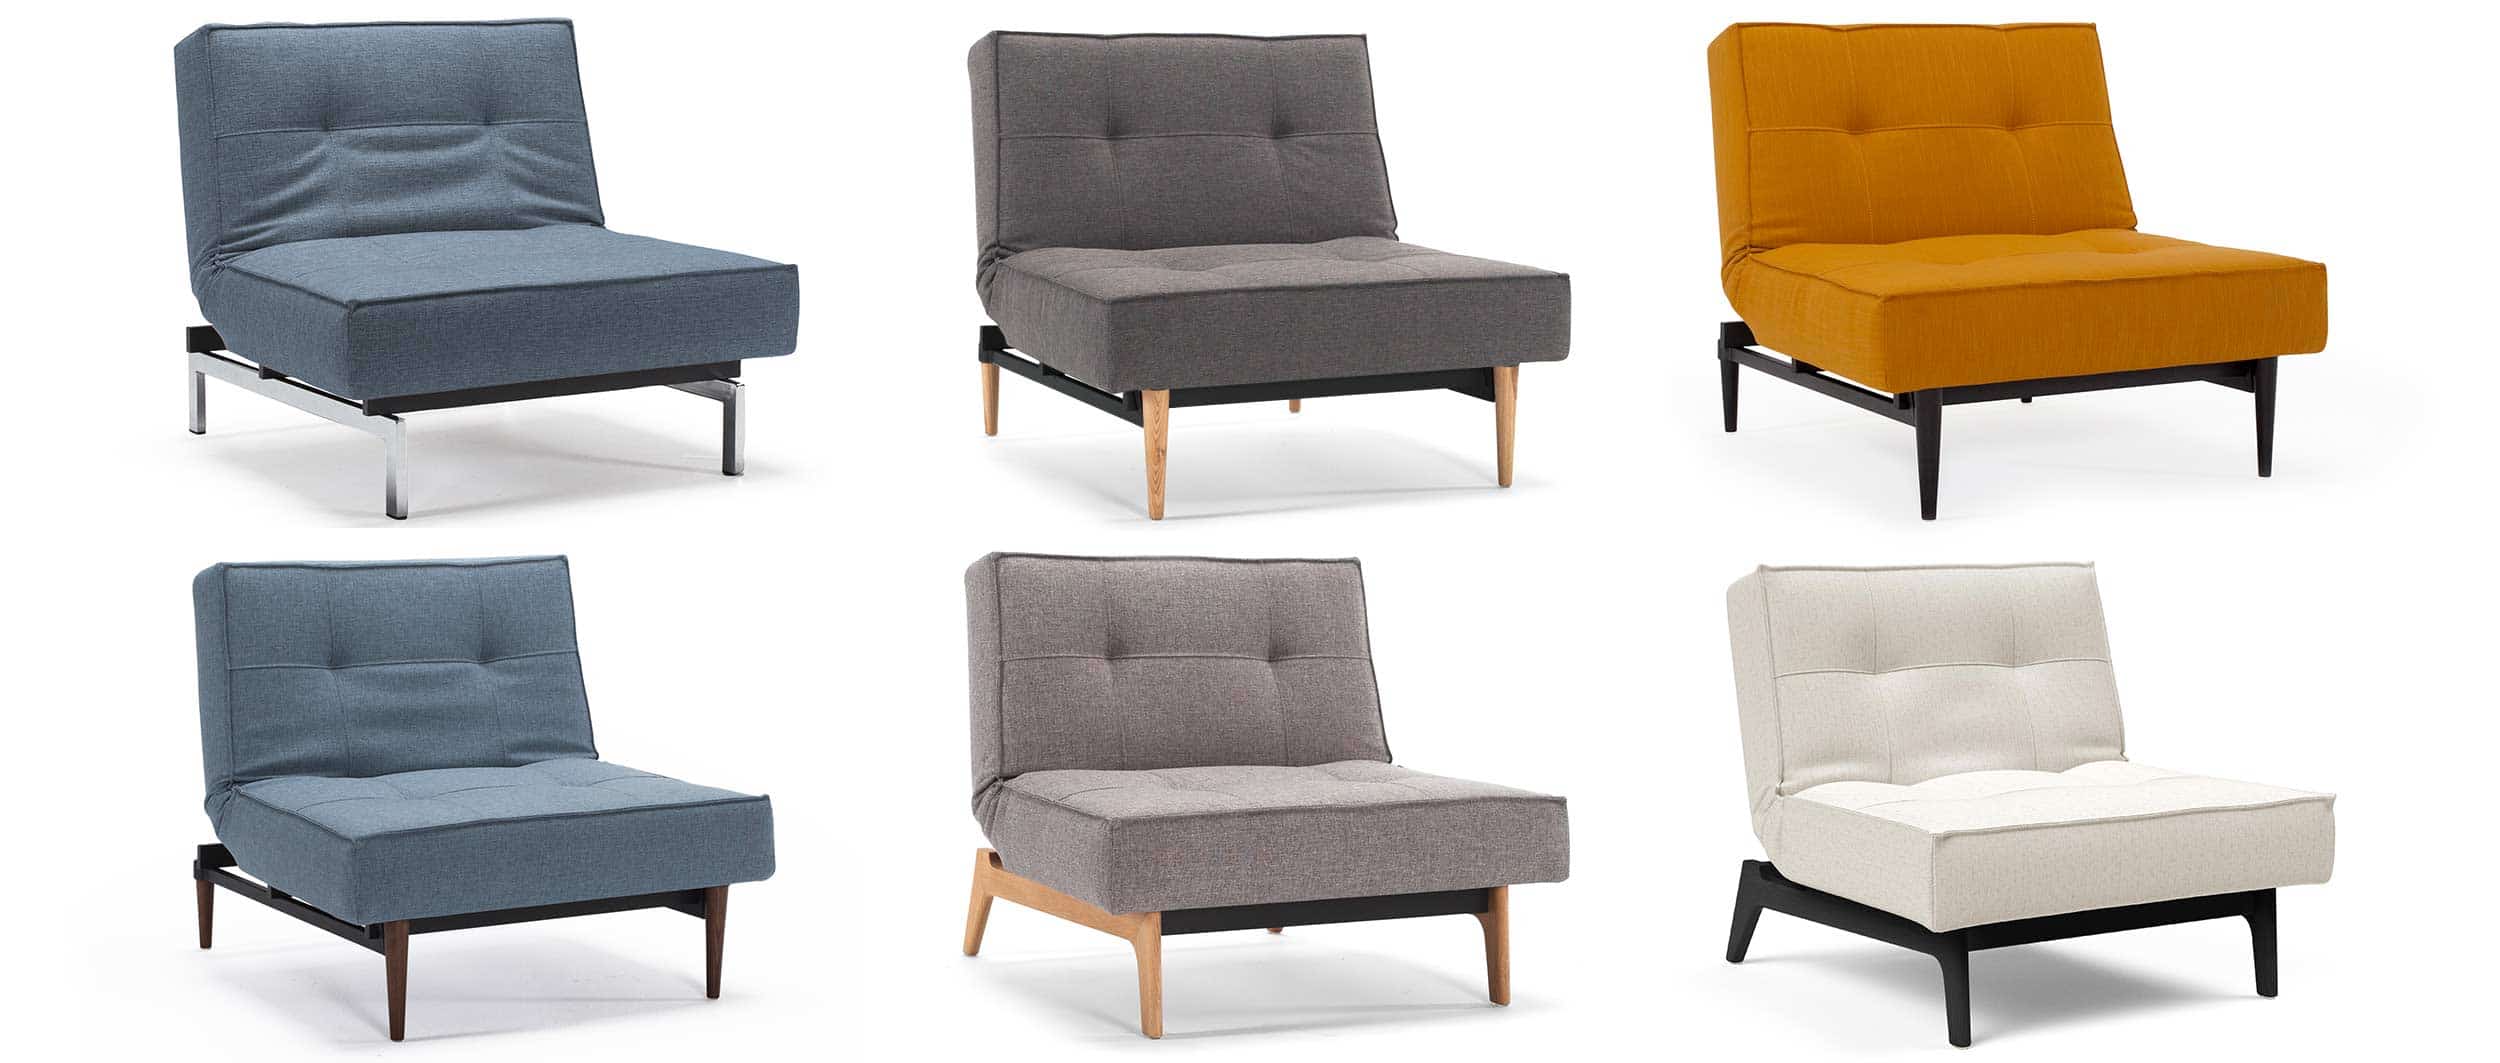 Innovation SPLITBACK Sessel mit verstellbarer Rückenlehne, Klappsessel skandinavisches Design